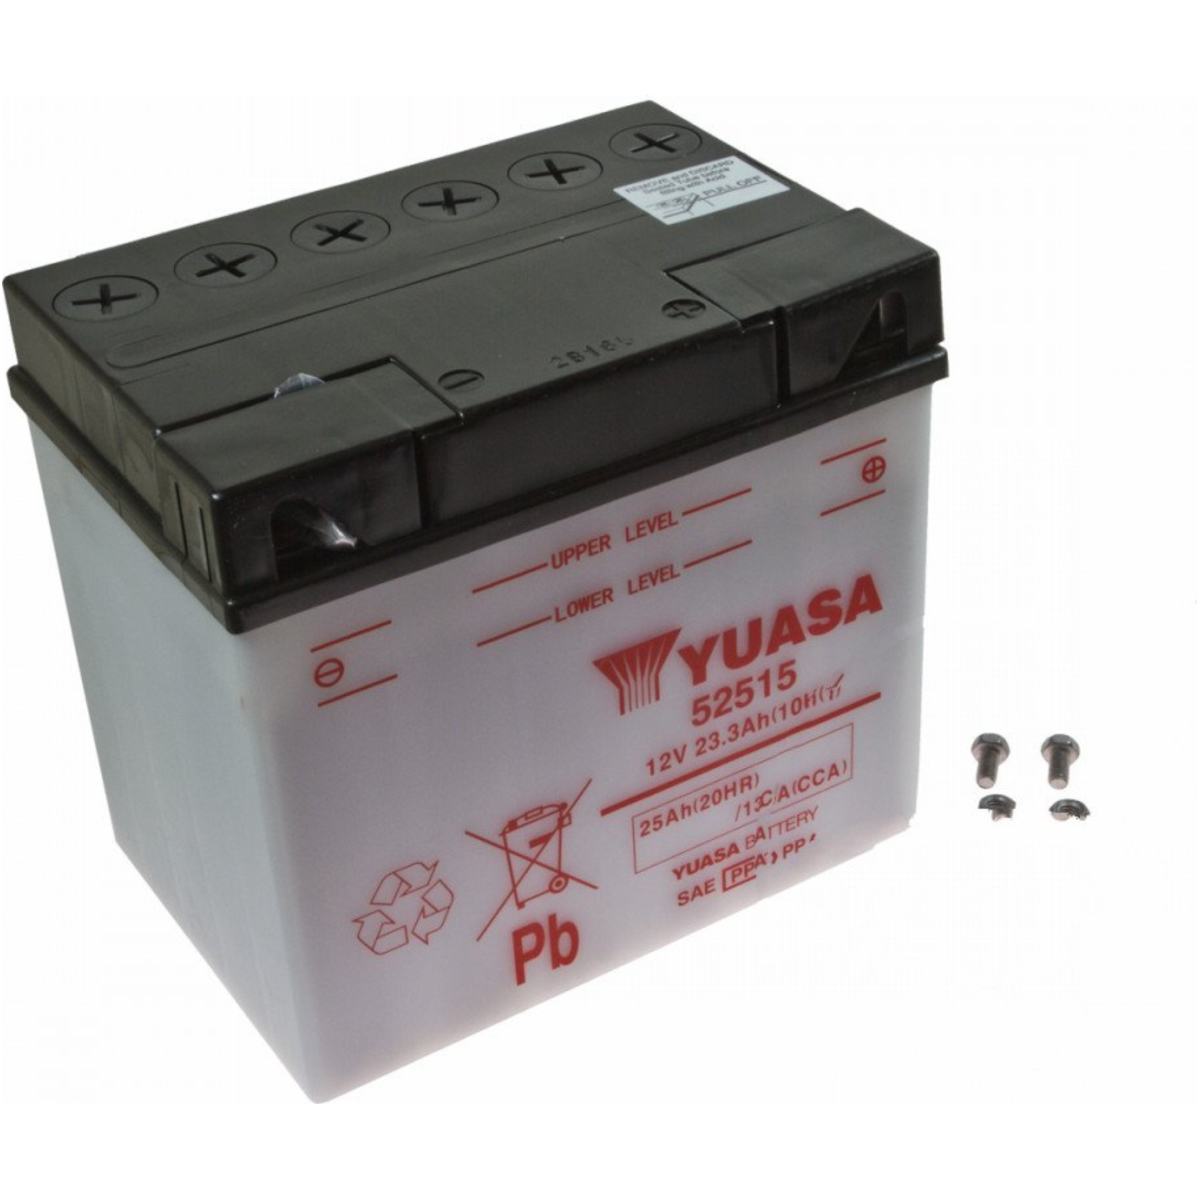 Yuasa 52515(dc) motorradbatterie 52515 dry von Yuasa